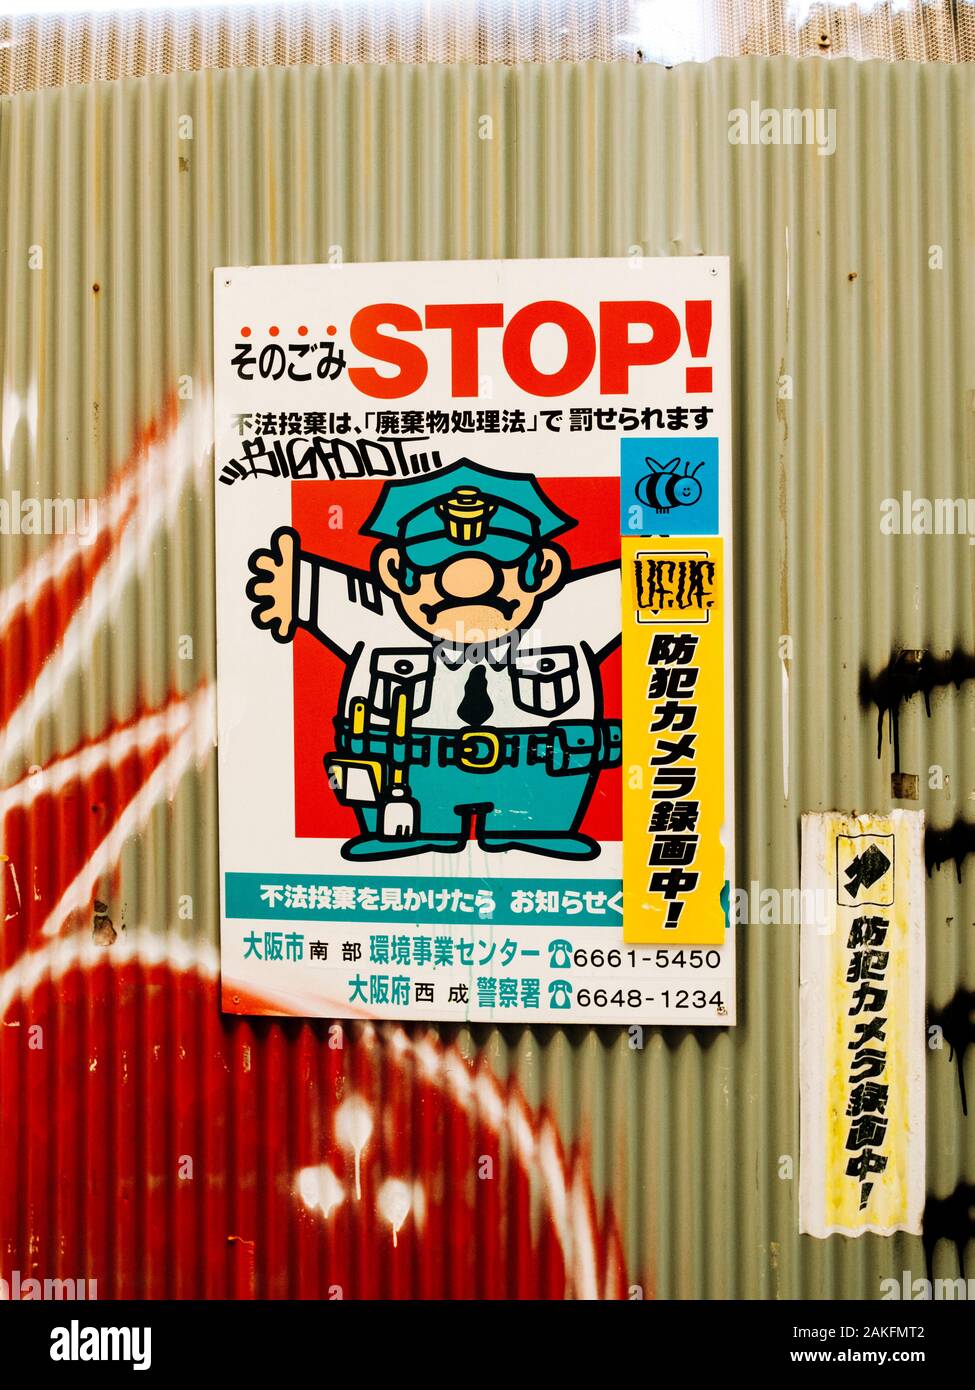 Signboard warning citizens of illegal waste disposal, Osaka/Japan Stock Photo